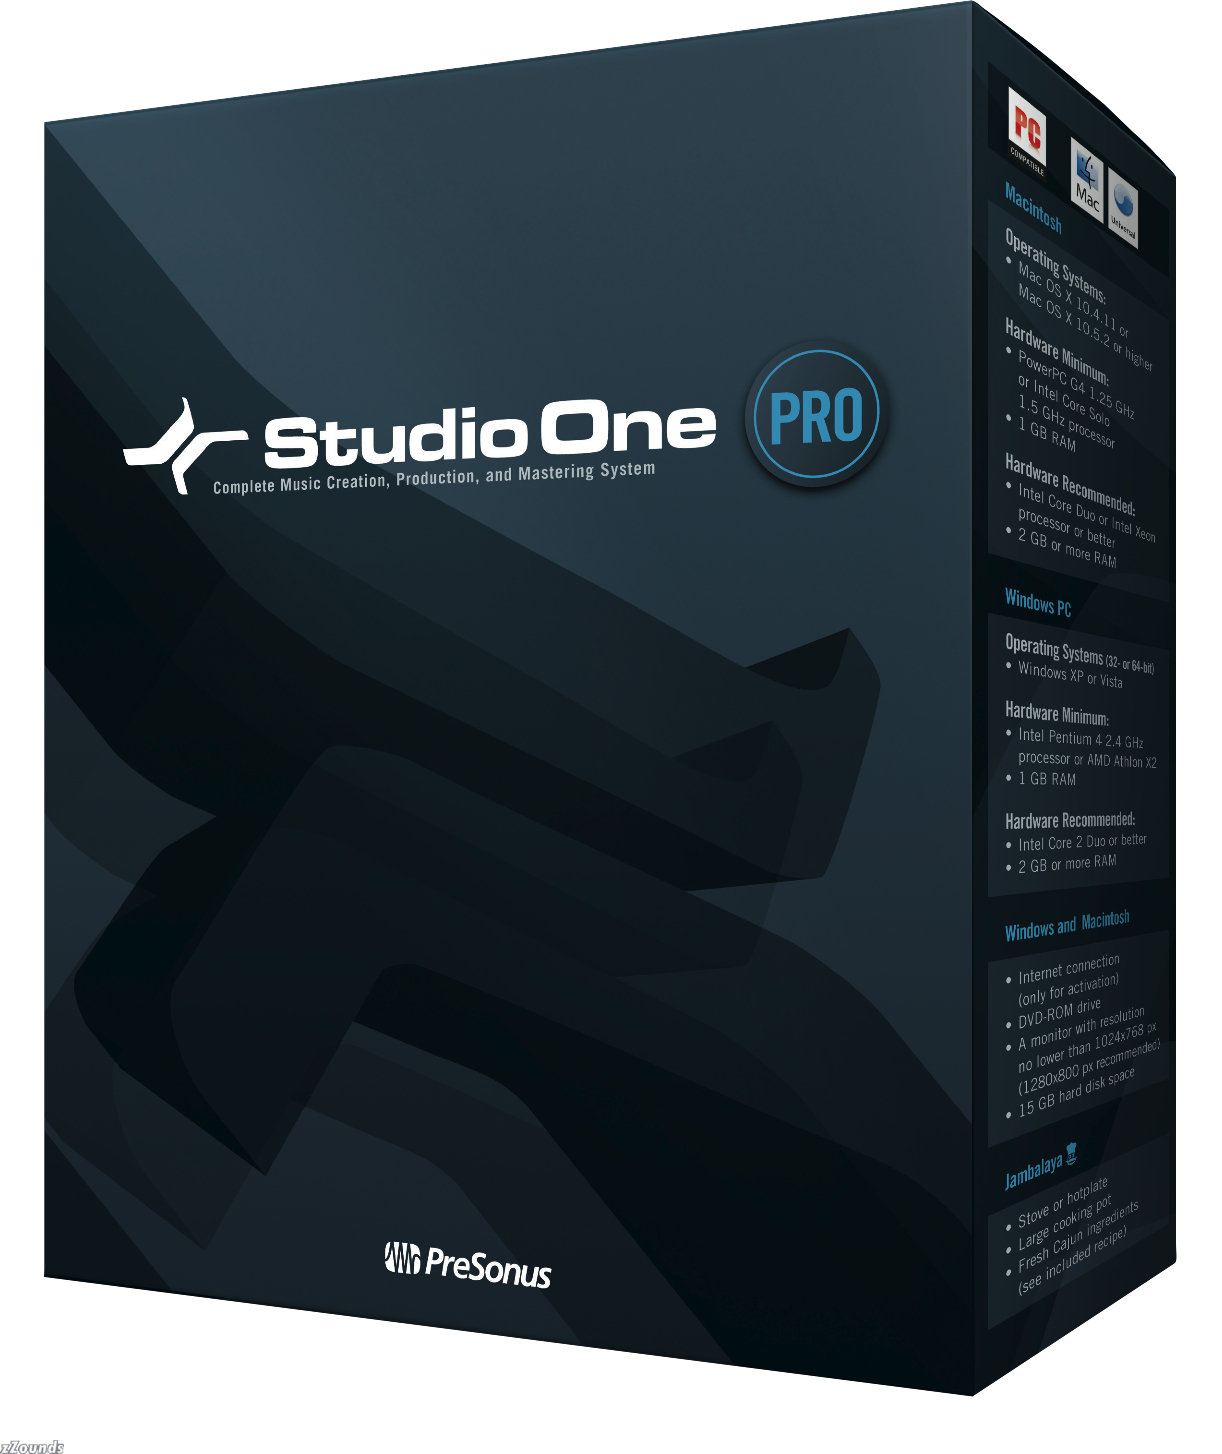 Presonus Studio One Pro v1.5.0 (x86/x64) All Windows + (MAcOSX)